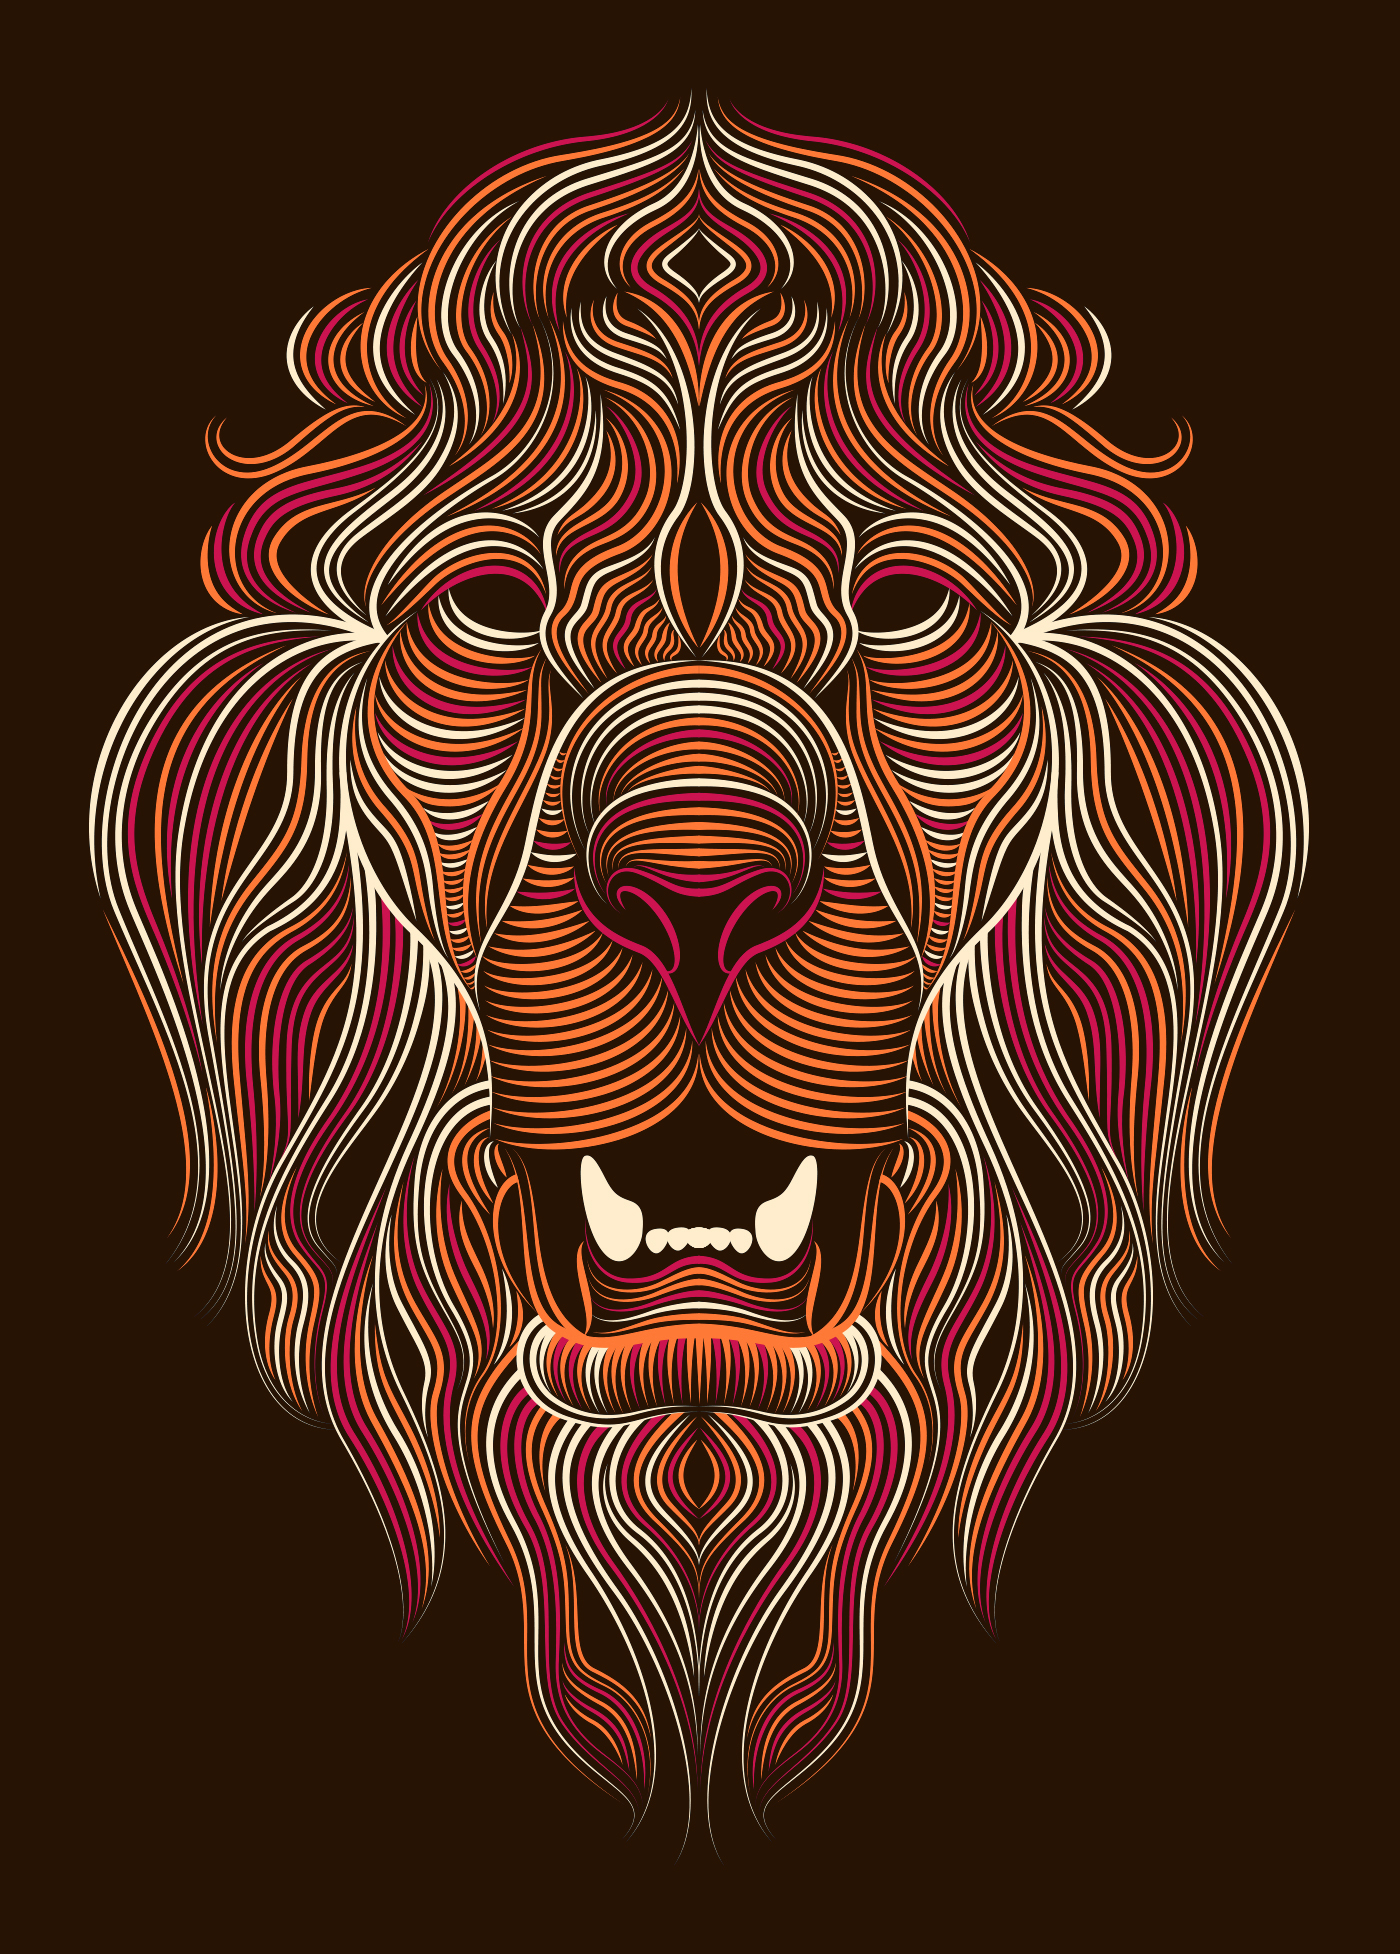 lion lines colors animal wild symetric adobe creative cloud Illustrator